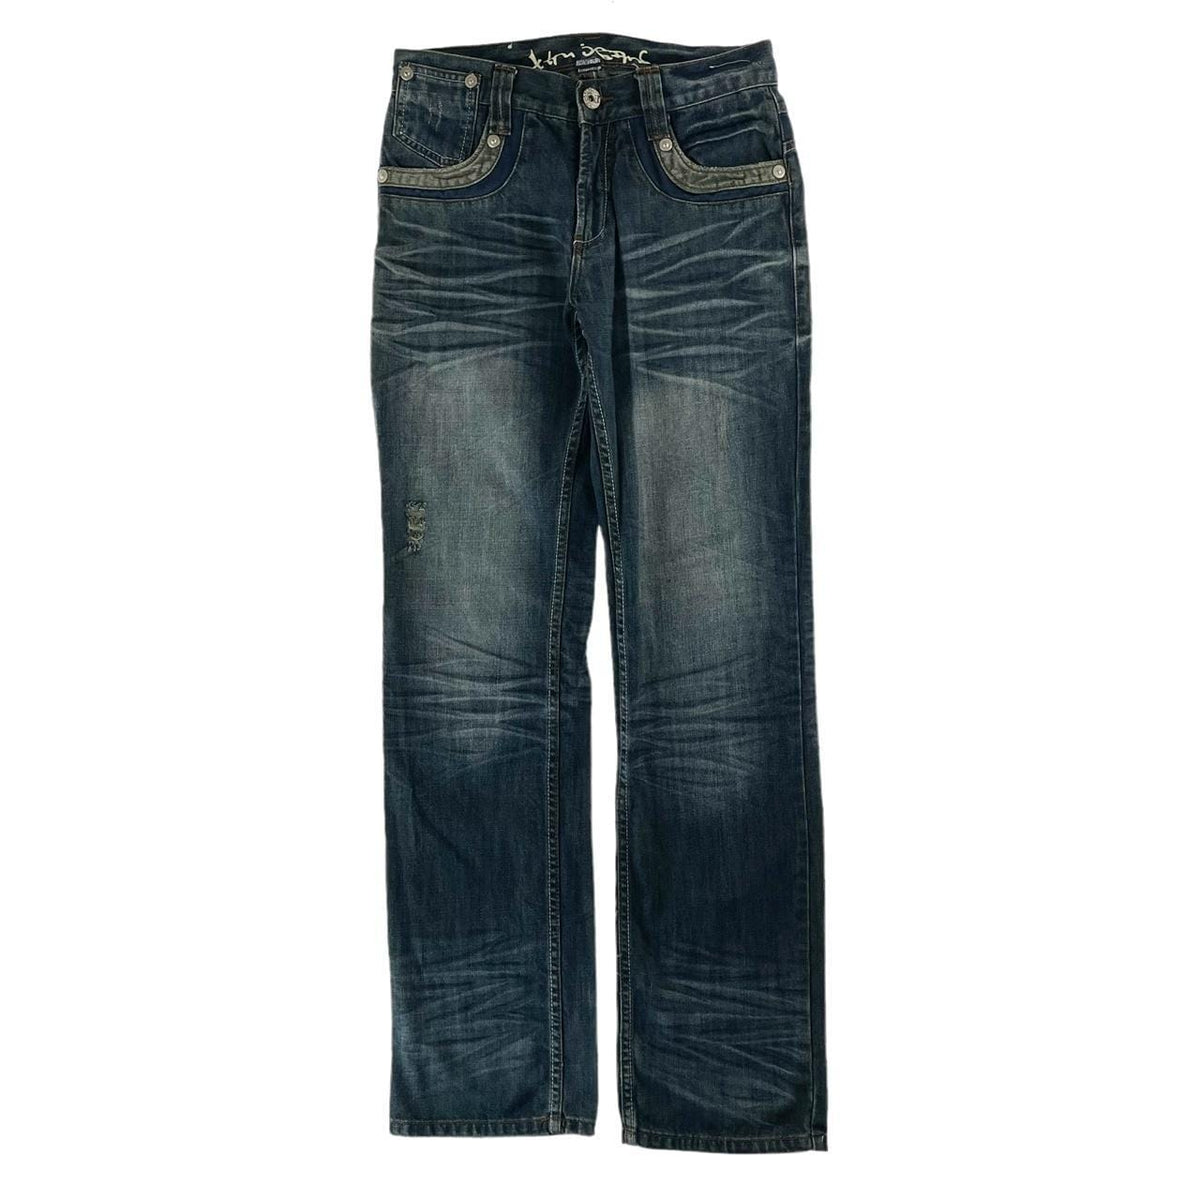 Vintage Japanese denim jeans trousers W28